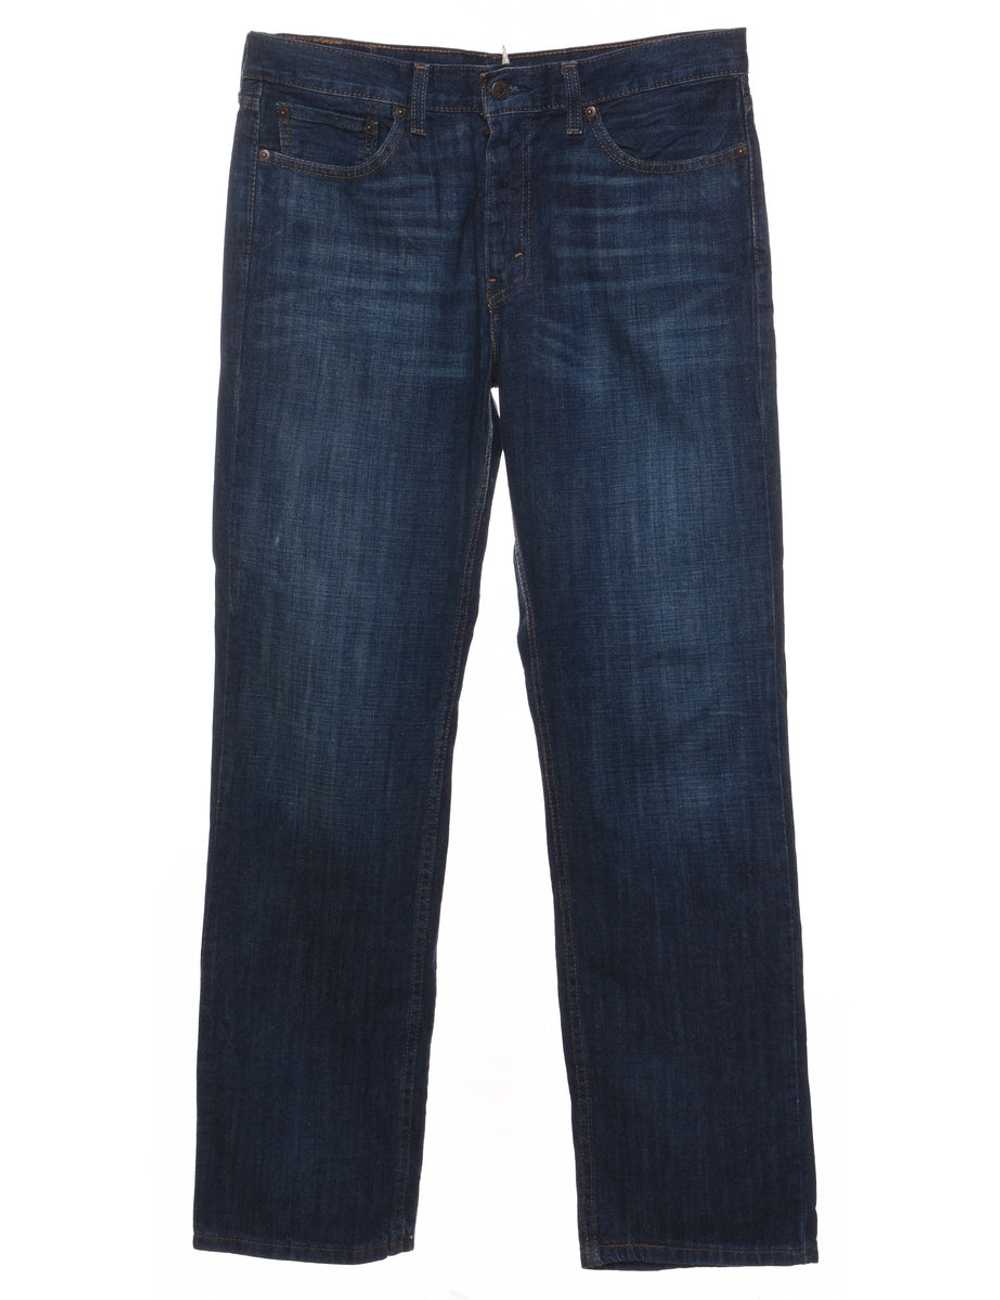 514's Fit Levi's Dark Wash Jeans - W34 L32 - image 1